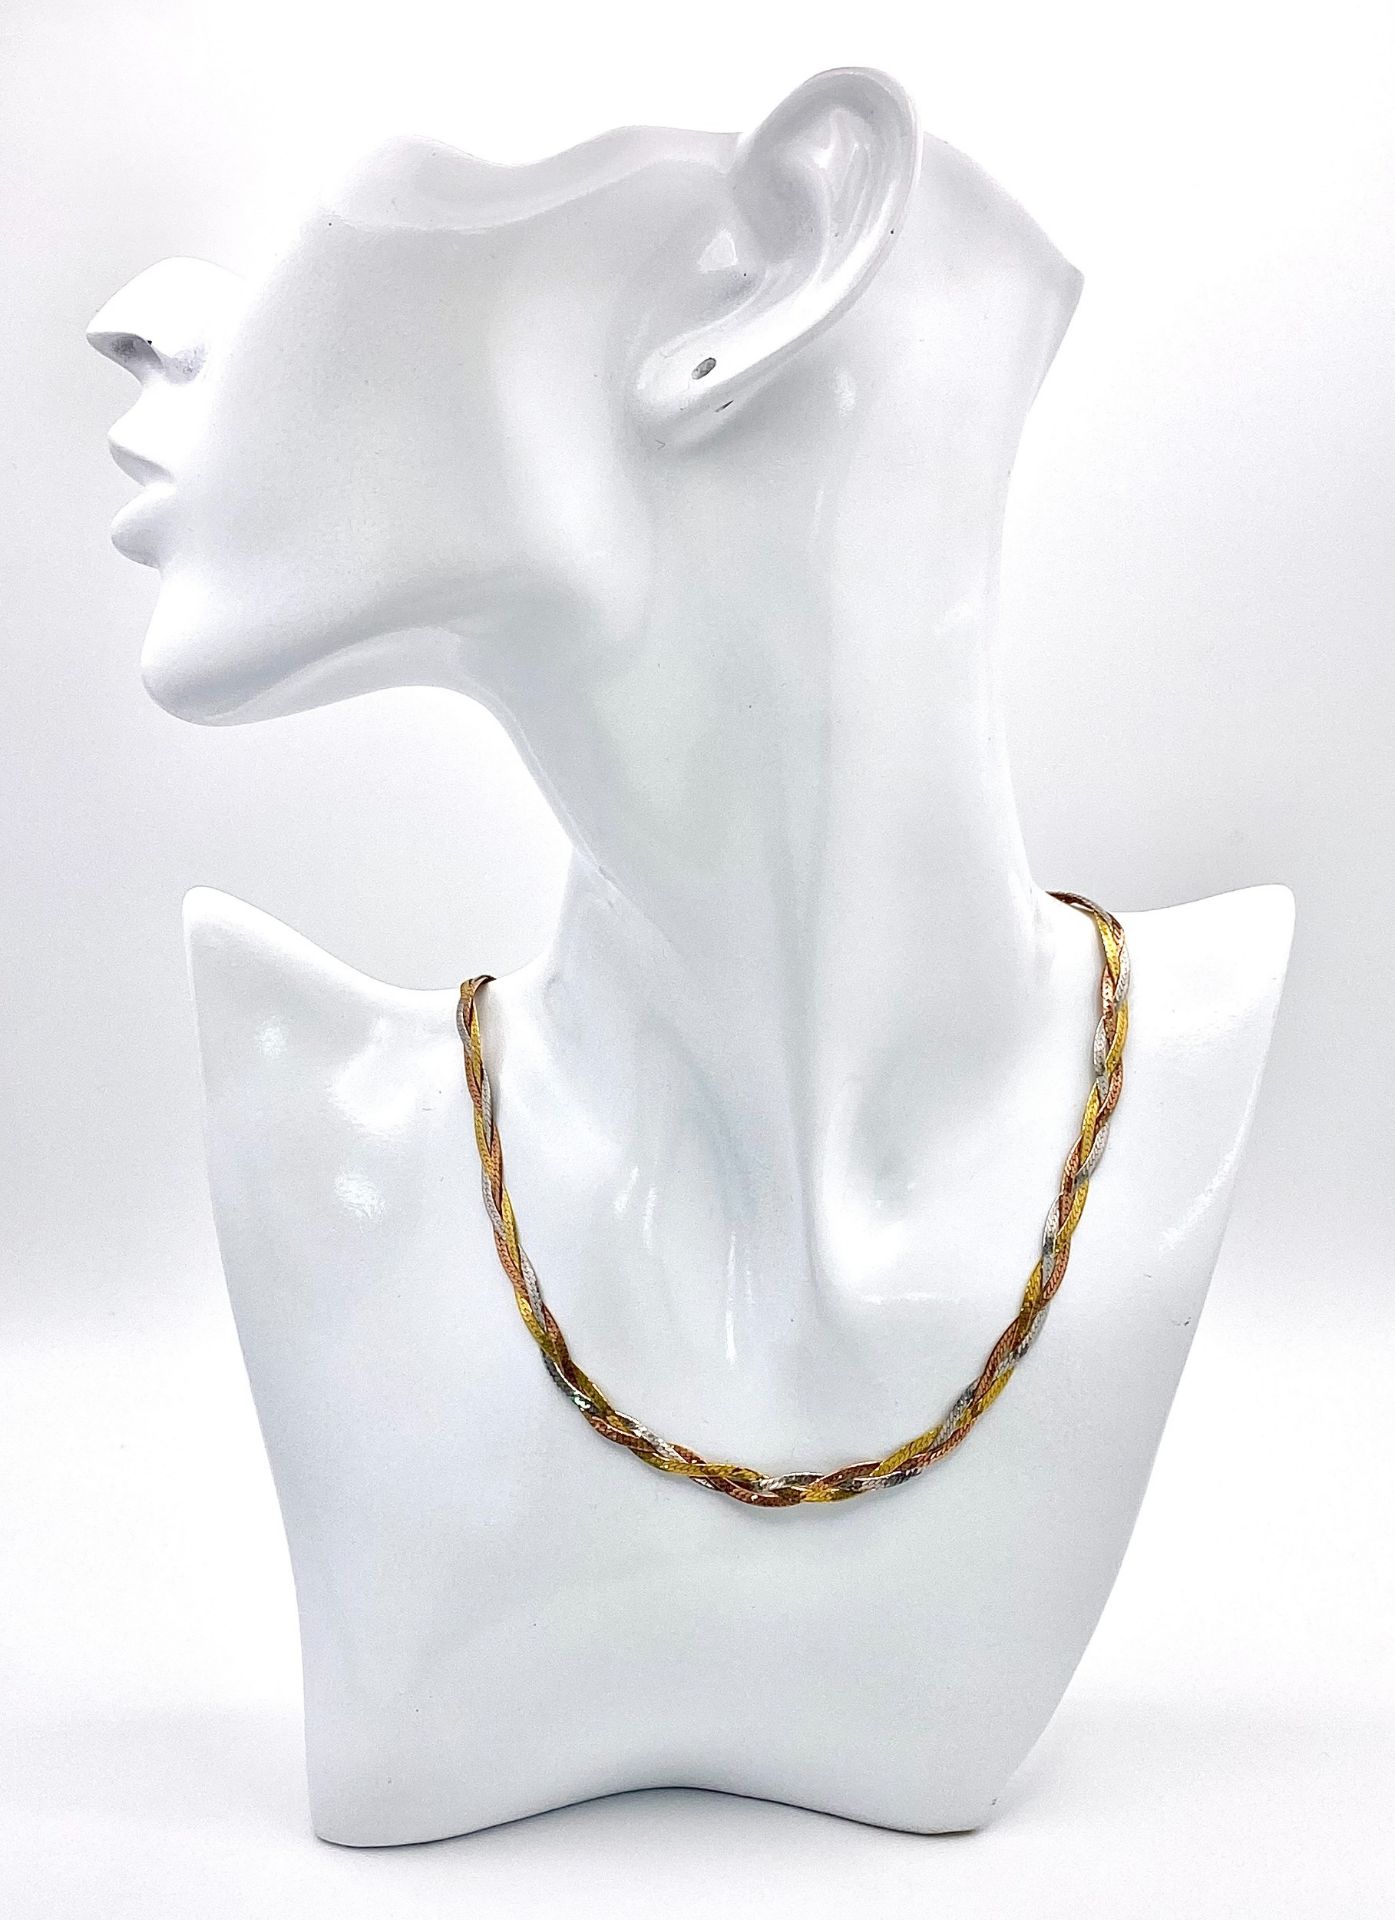 A 9K Tri-Colour Gold Entwined Flat Necklace. 44cm. 7.6g weight - Bild 2 aus 4